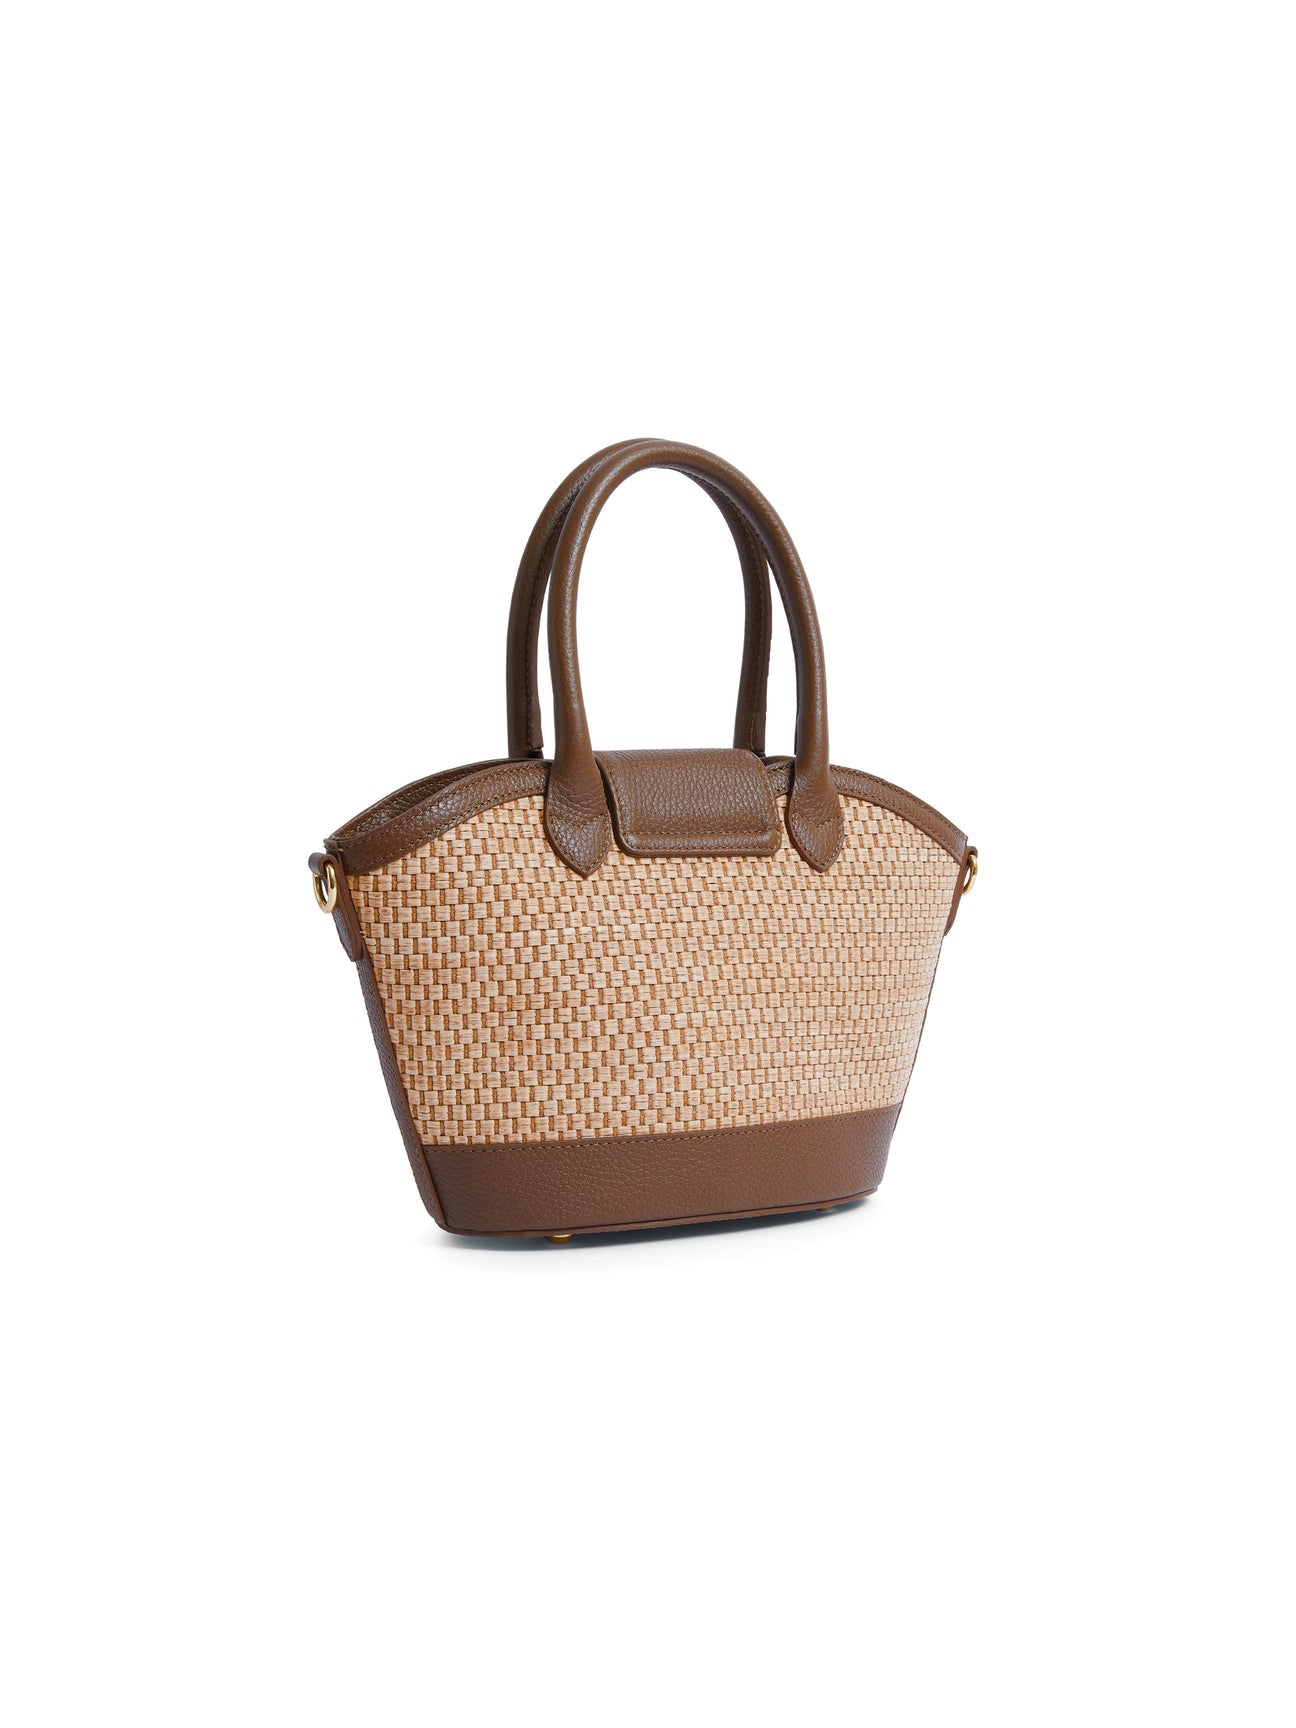 The Mini Windsor Basket Tan Leather